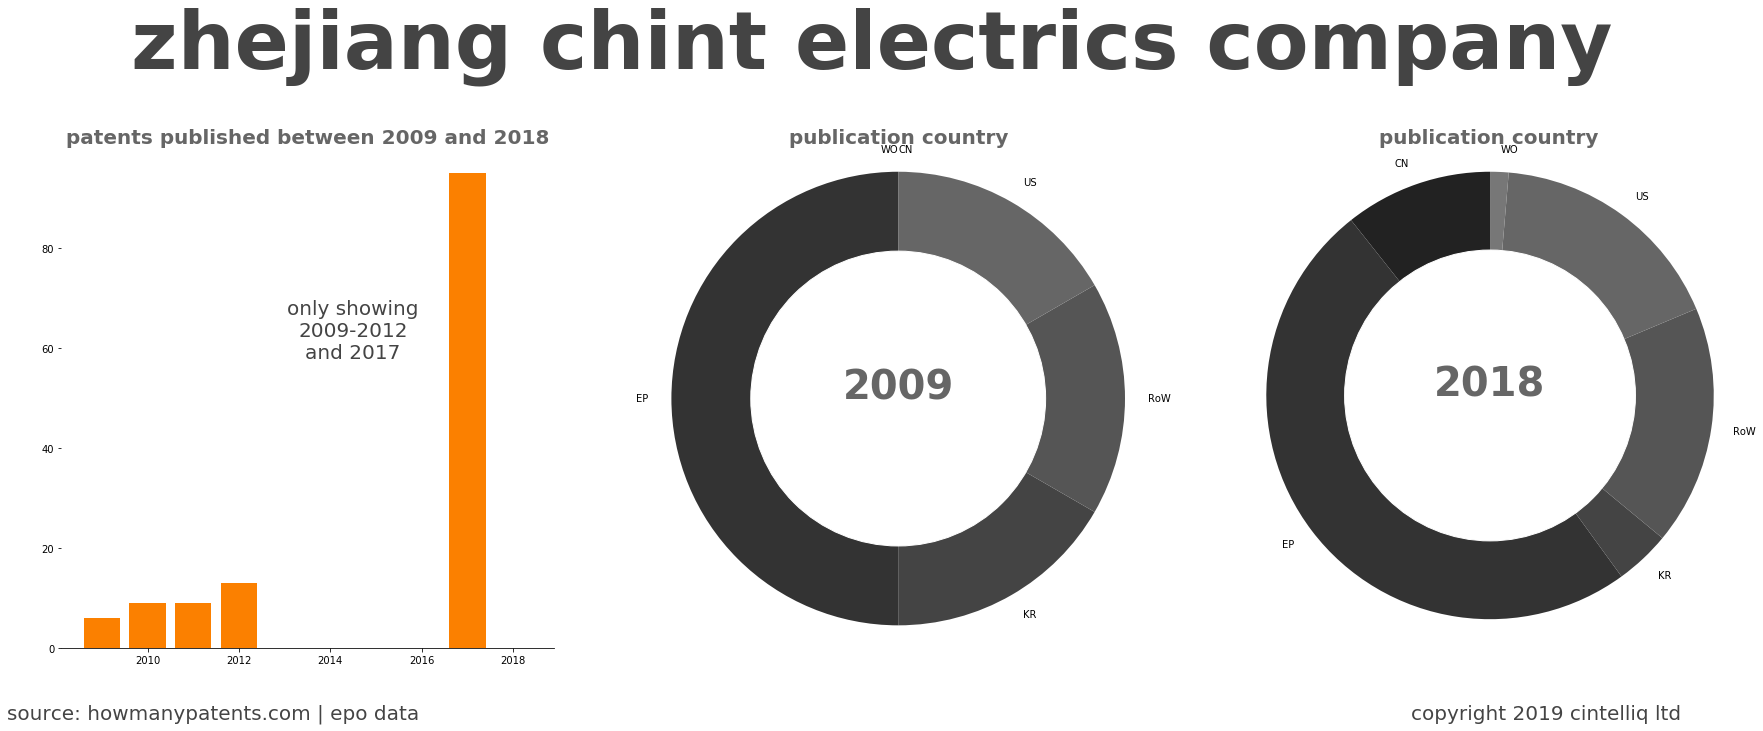 summary of patents for Zhejiang Chint Electrics Company